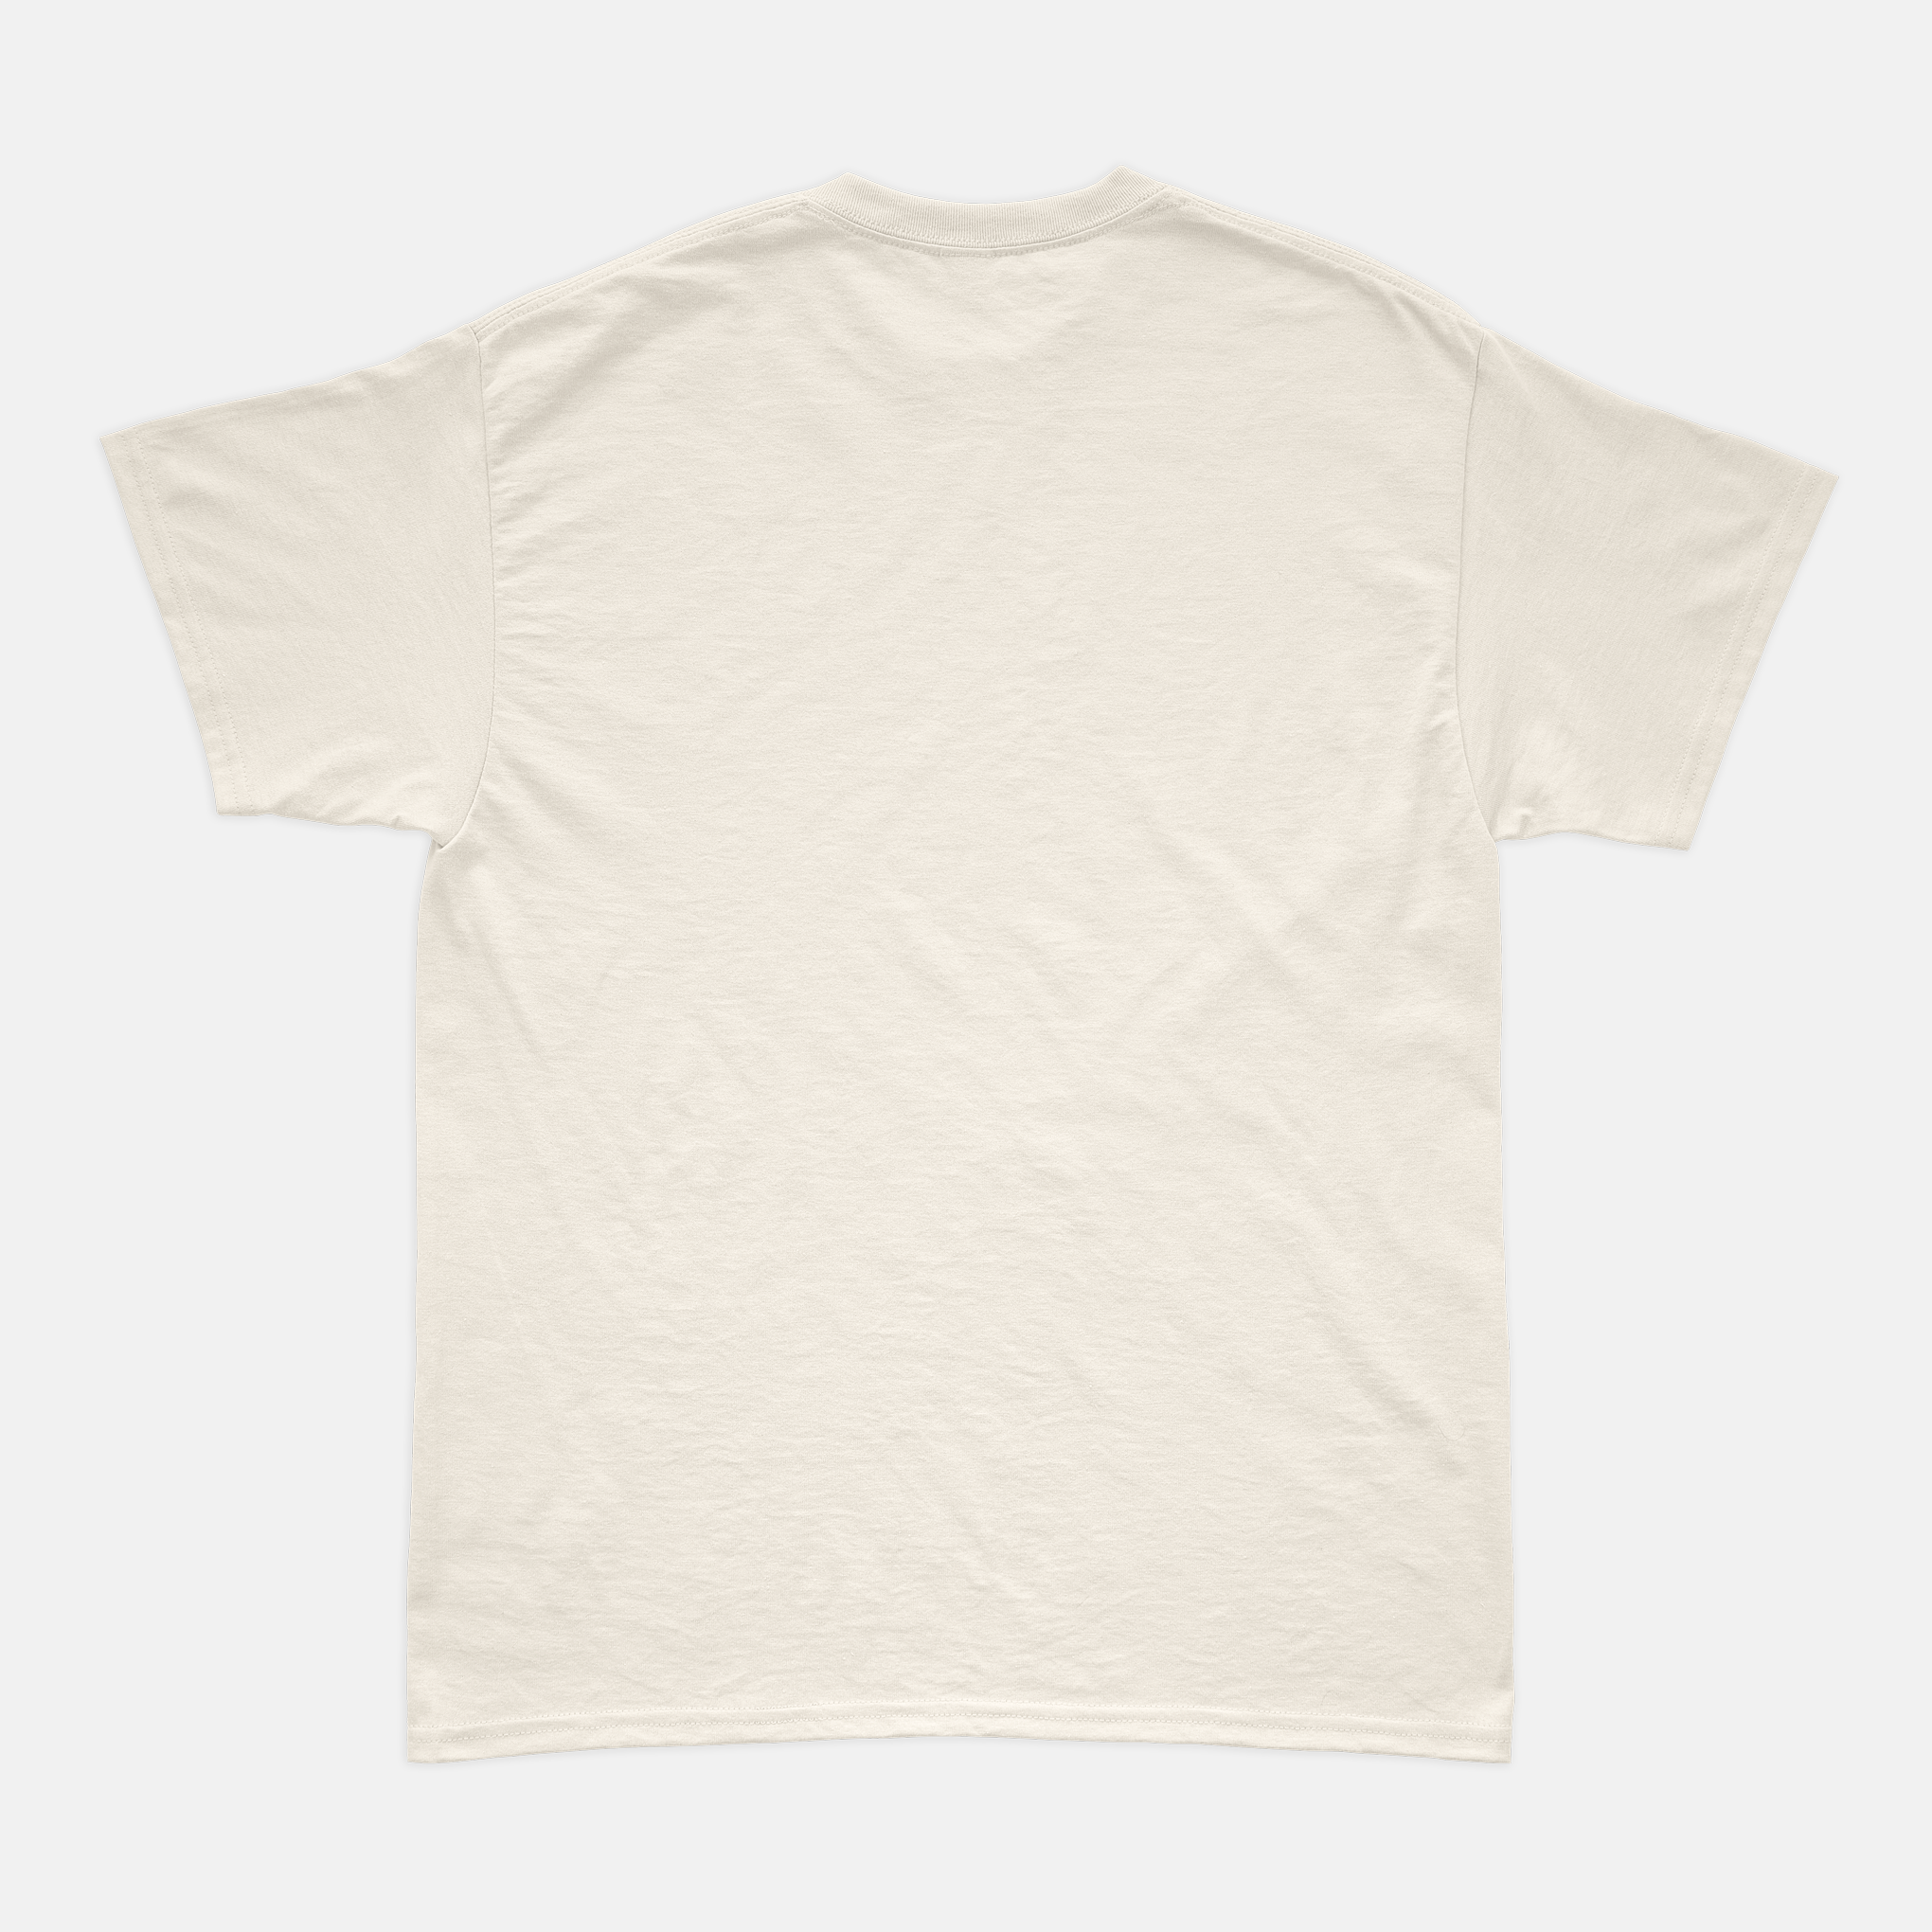 Camiseta RaioX Charles Leclerc Off White